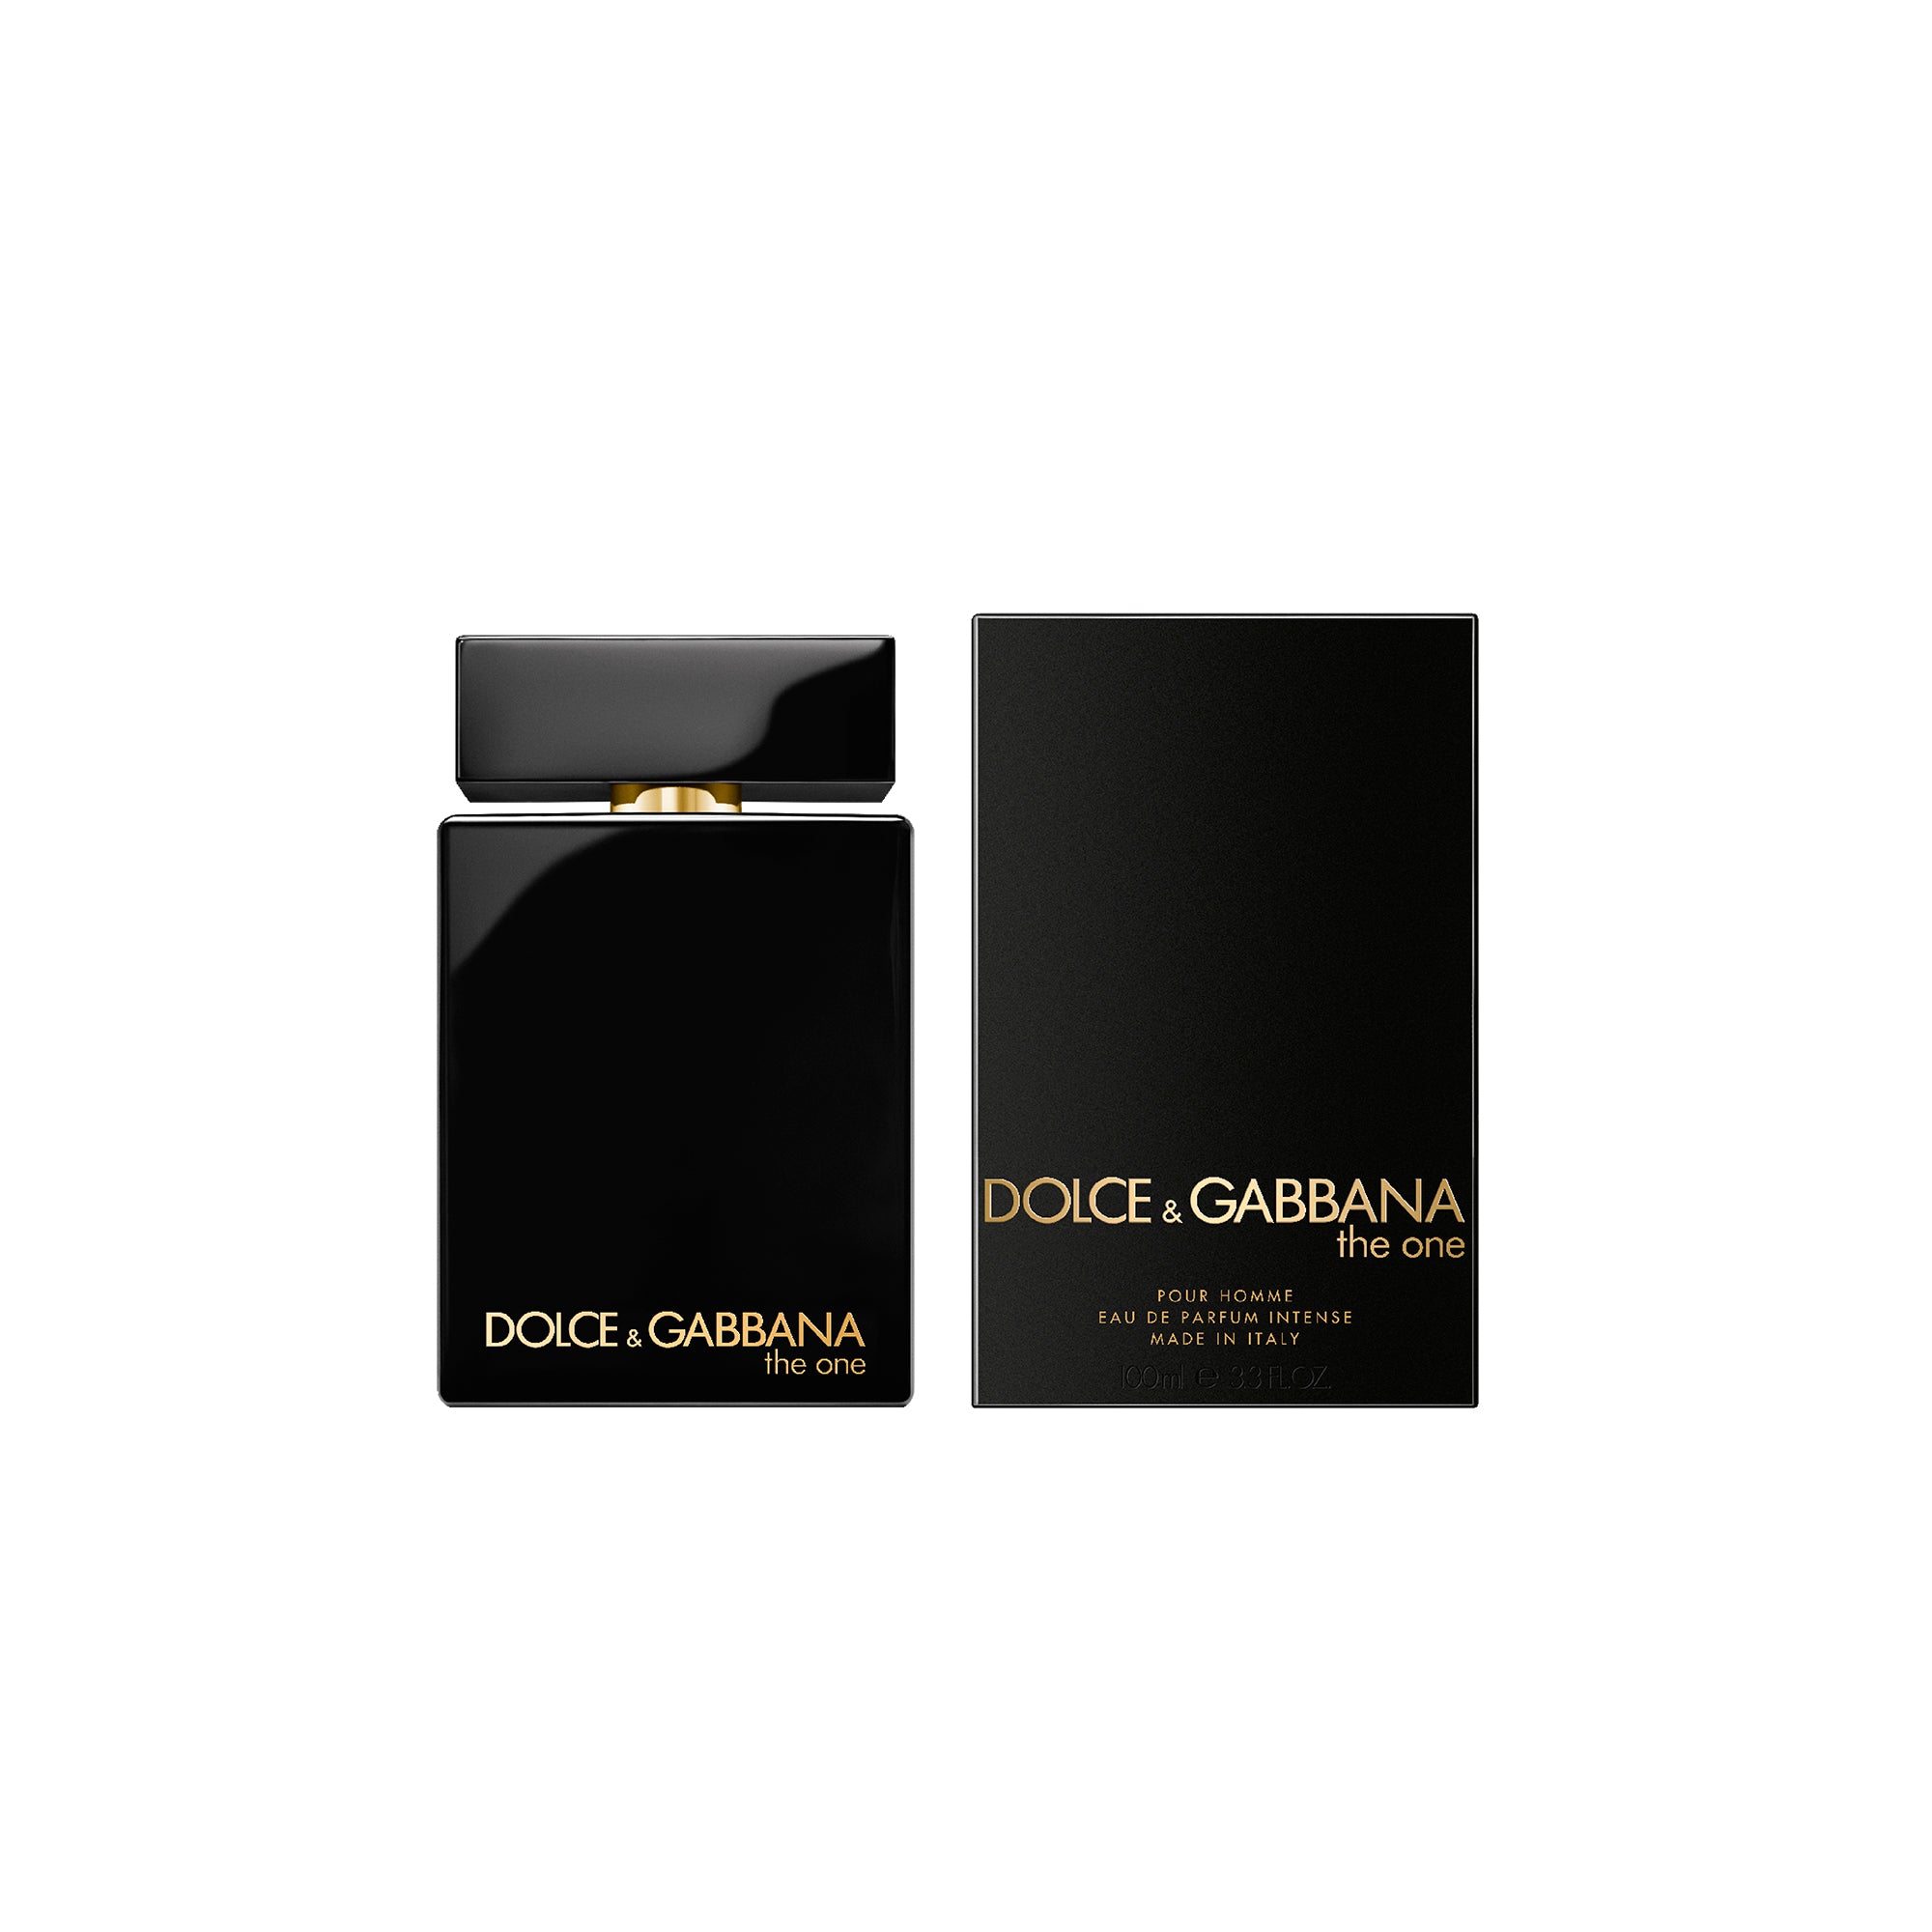 DOLCE & GABBANA The One For Men Eau de Parfum Intense 100 ml